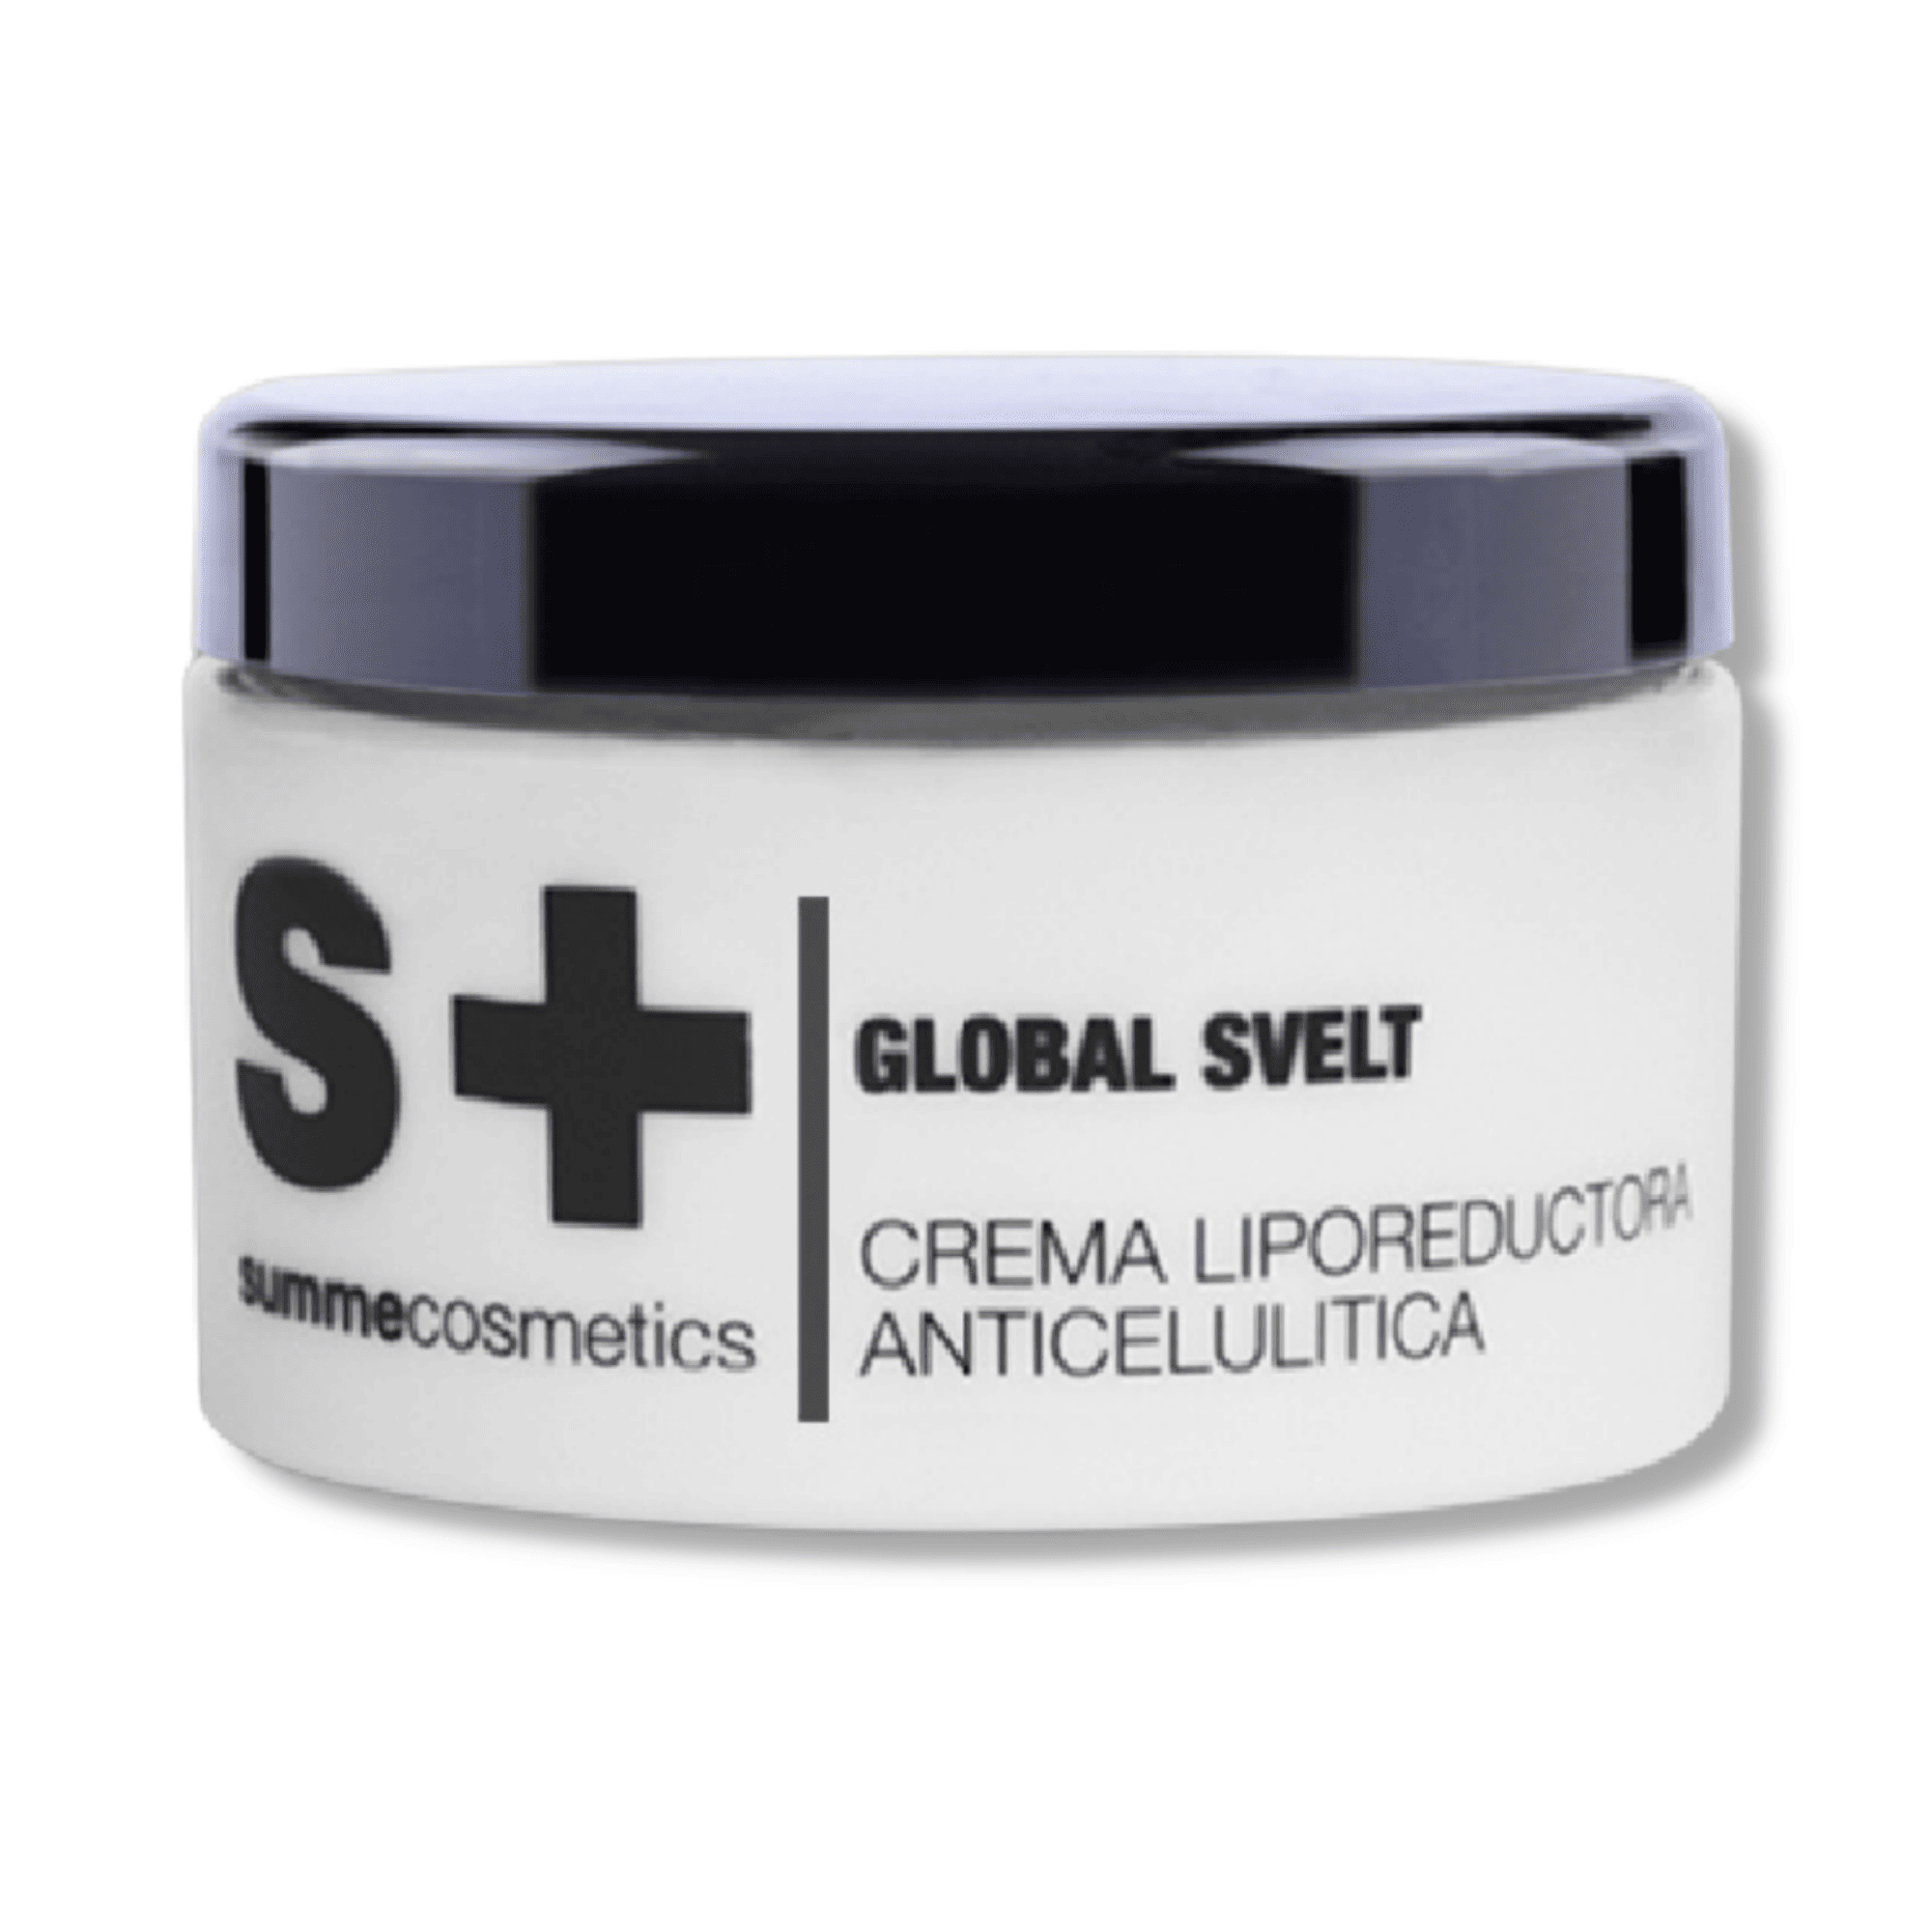 Summe Cosmetics Global Svelt - Crema Liporeductora Anticelulitica